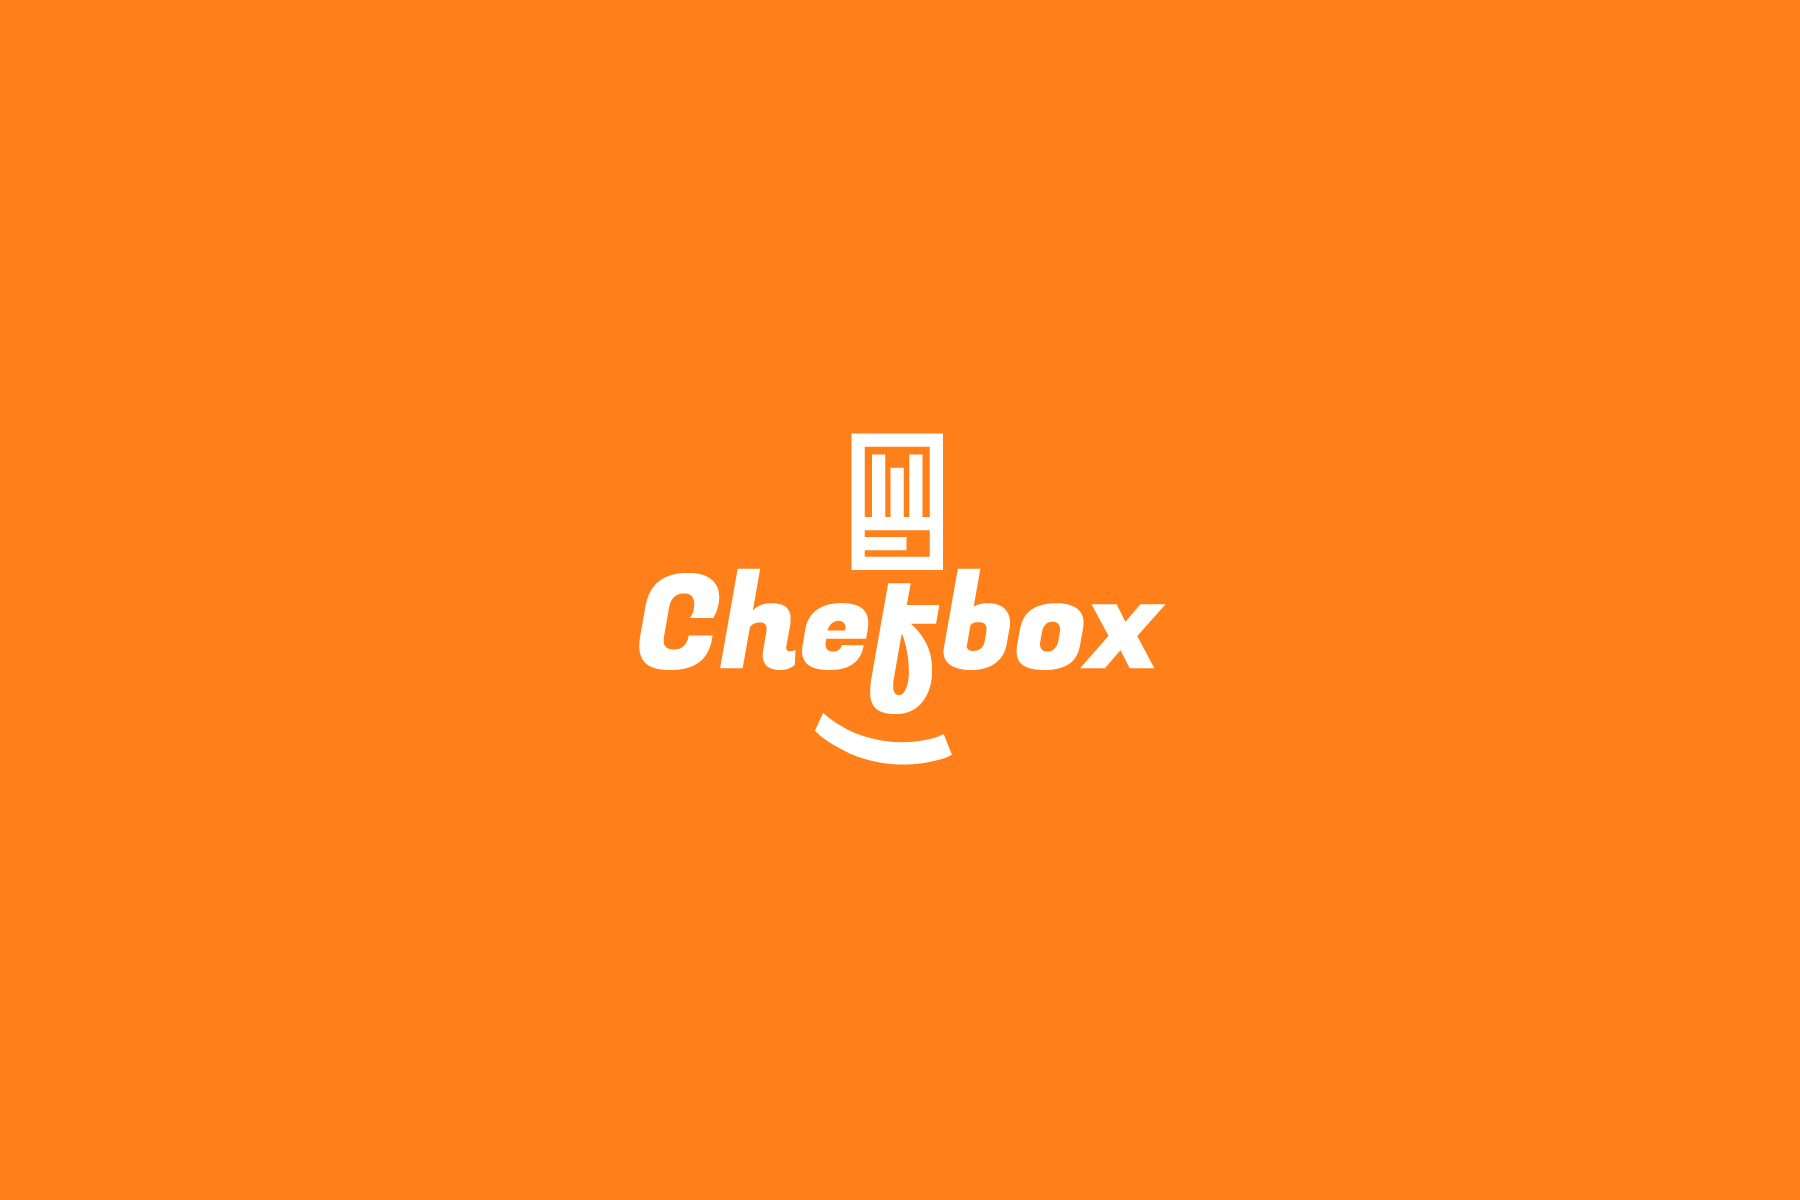 General Assembly Singapore - Chefbox App - Logo Orange - Leow Hou Teng